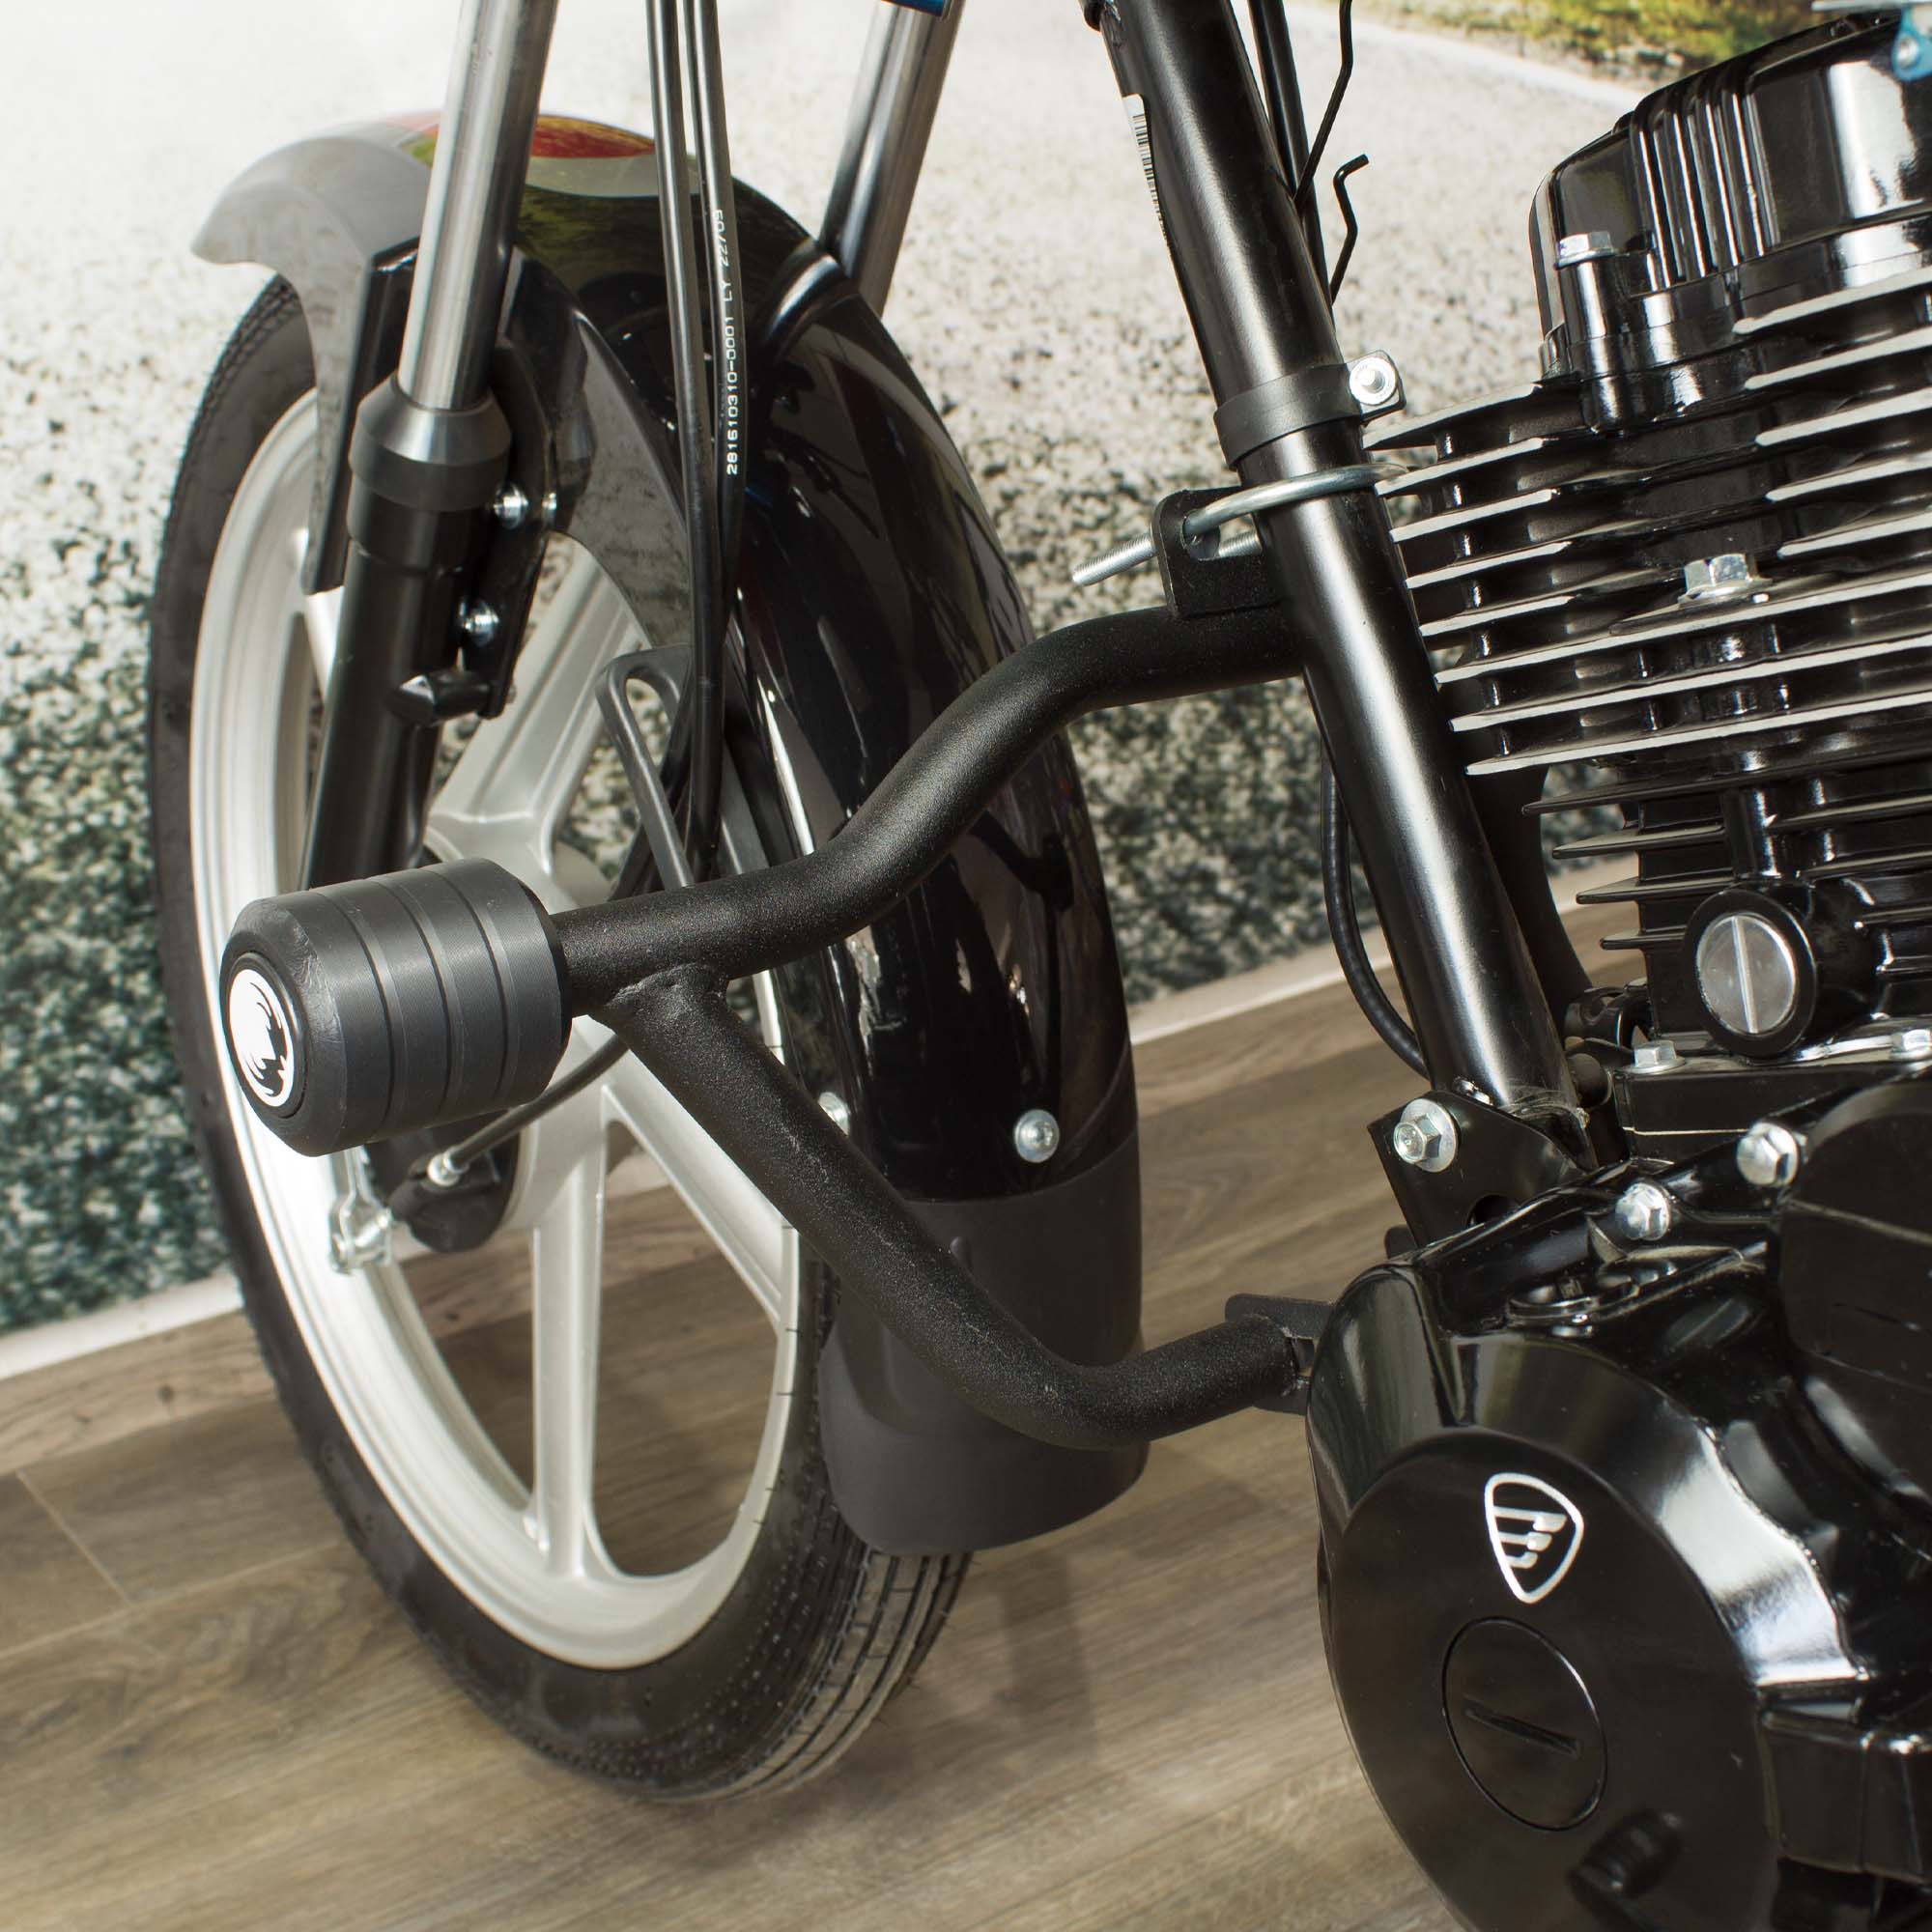 Bicimex Detalles Slider para motocicleta universal motos de trabajo